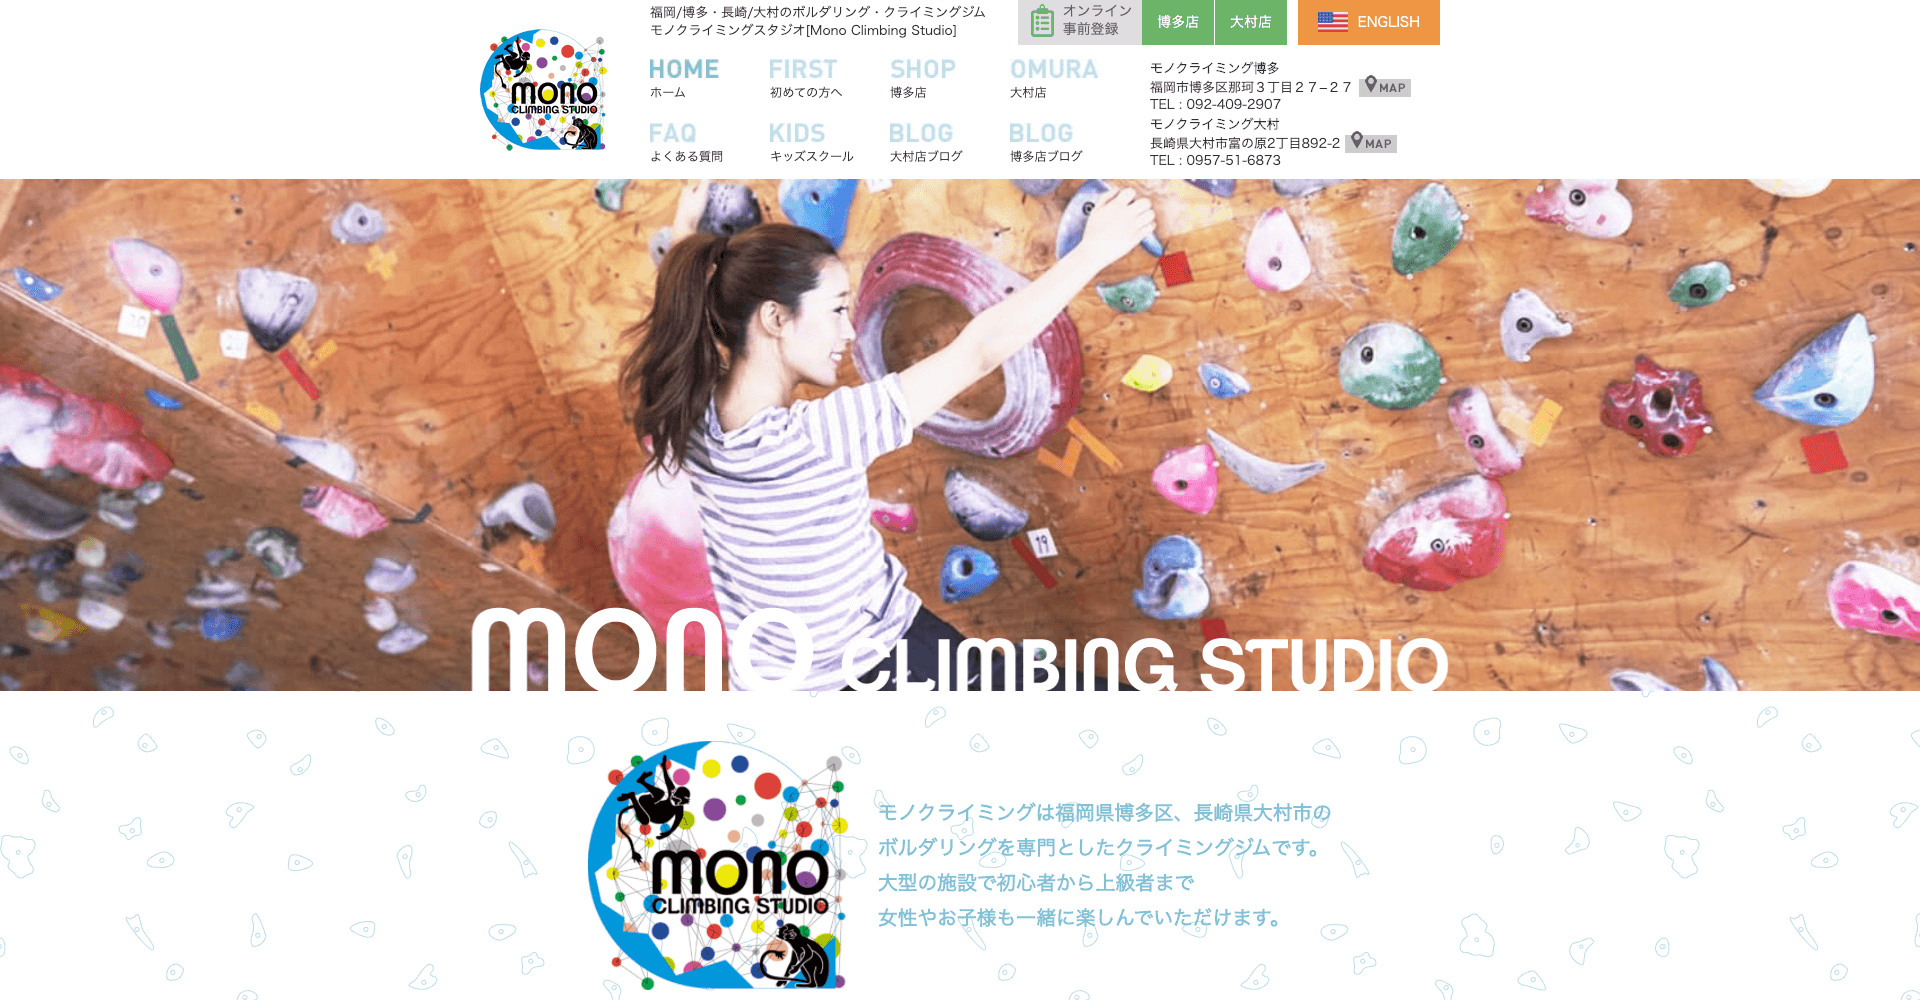 Mono Climbing Studio 大村店 モノクライミングスタジオ オオムラ